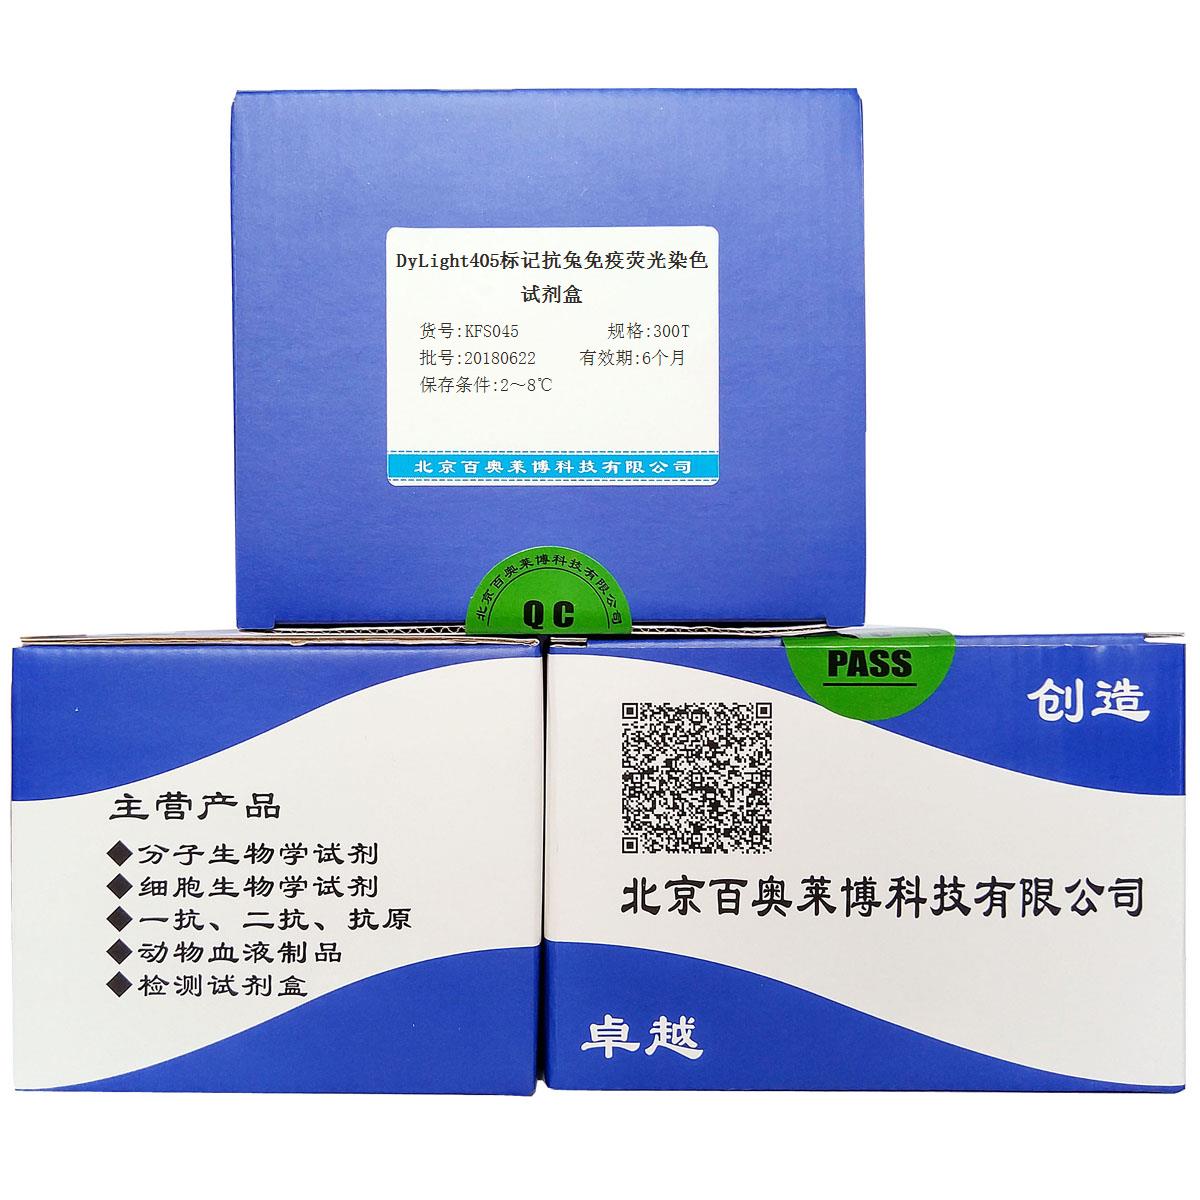 DyLight405标记抗兔免疫荧光染色试剂盒优惠